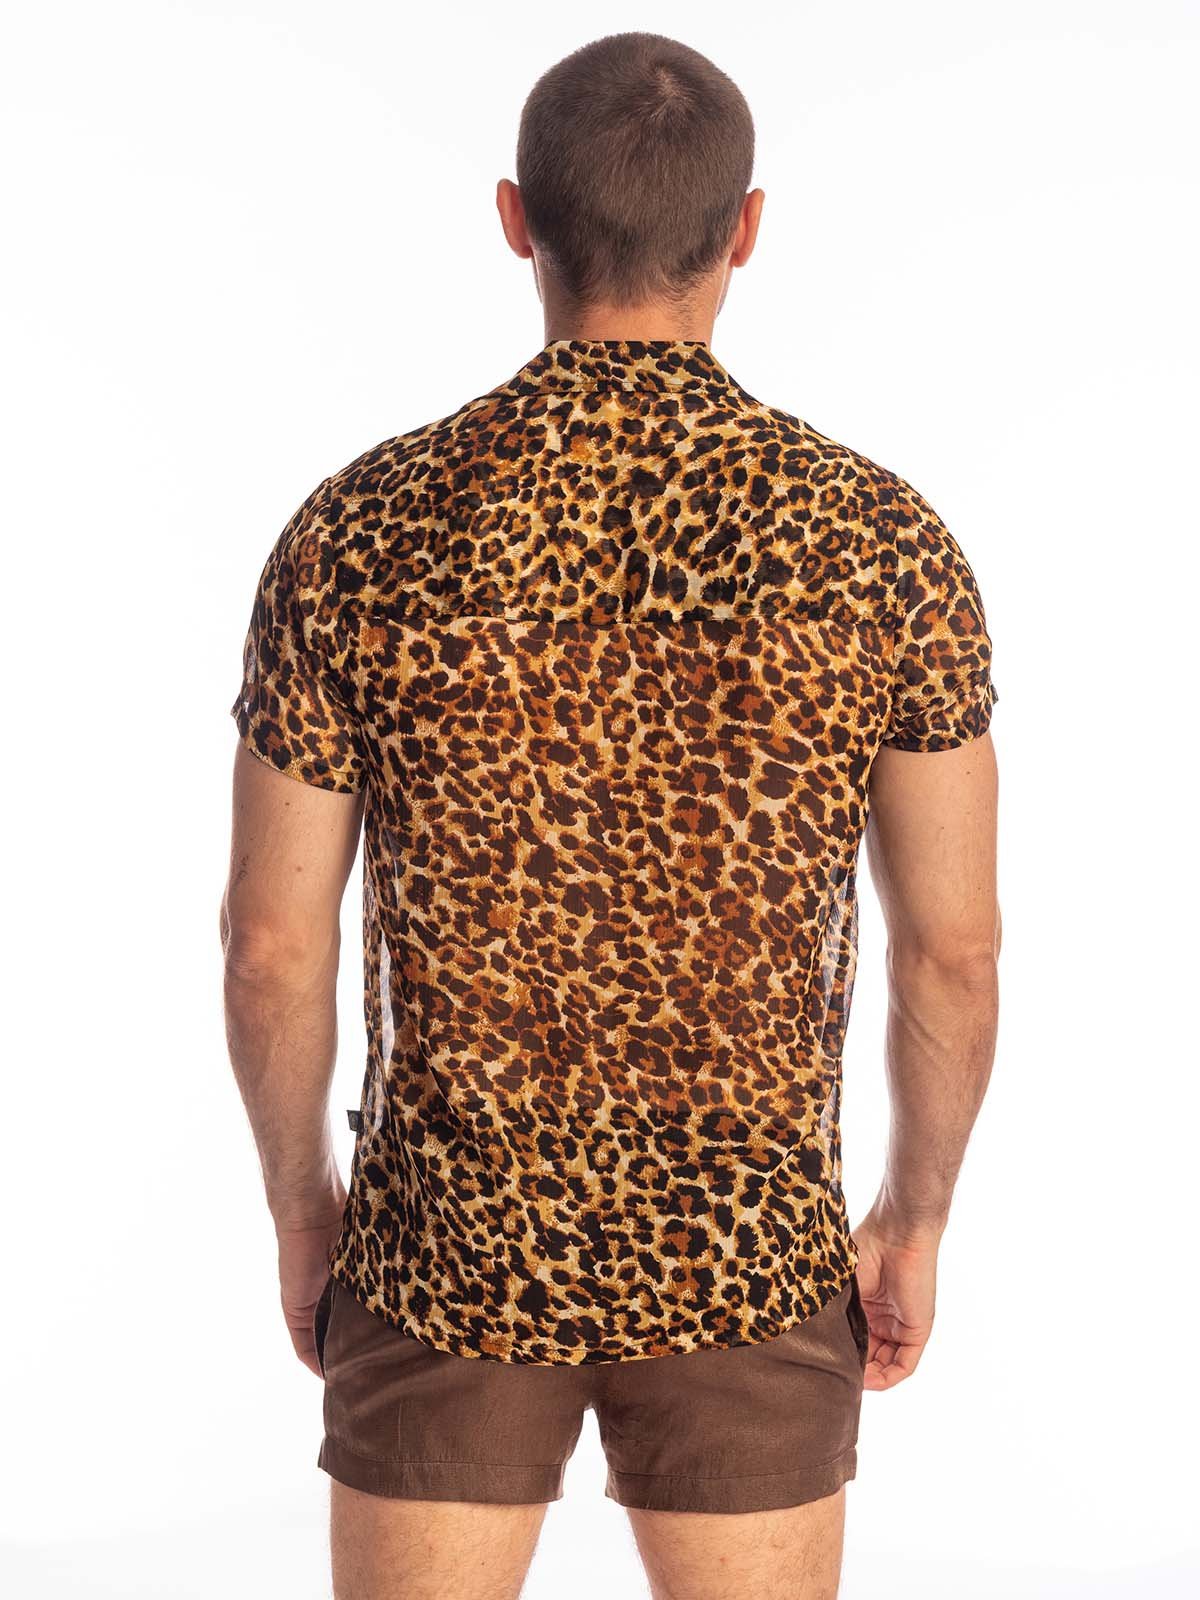 Boxy Shirt |  Leopard Print